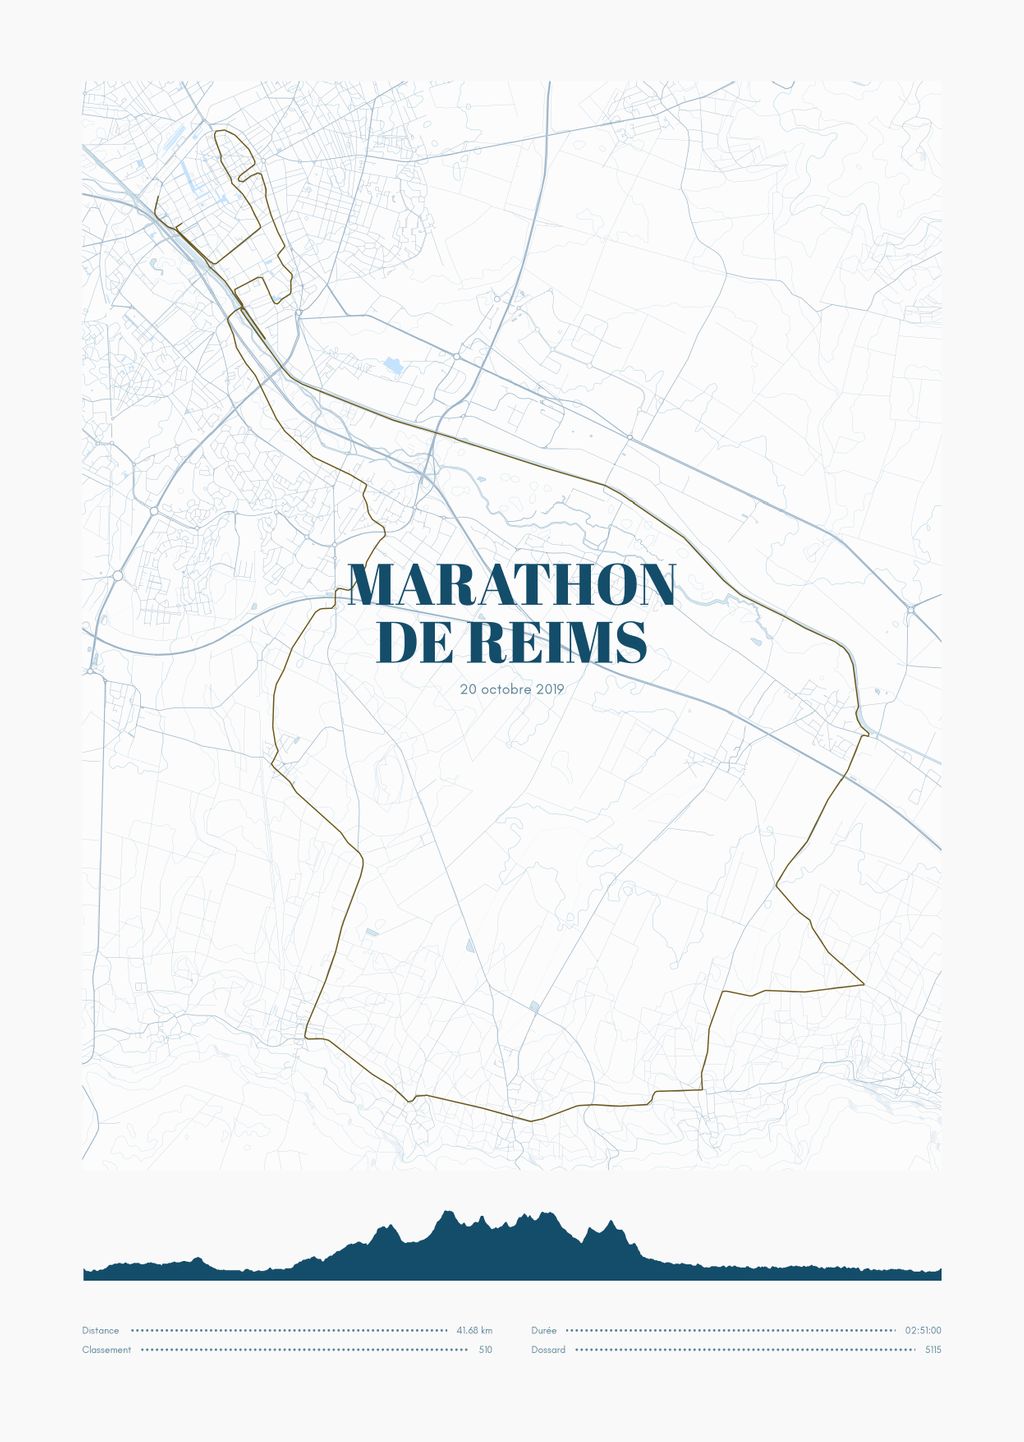 Póster con un mapa de Marathon 
de Reims